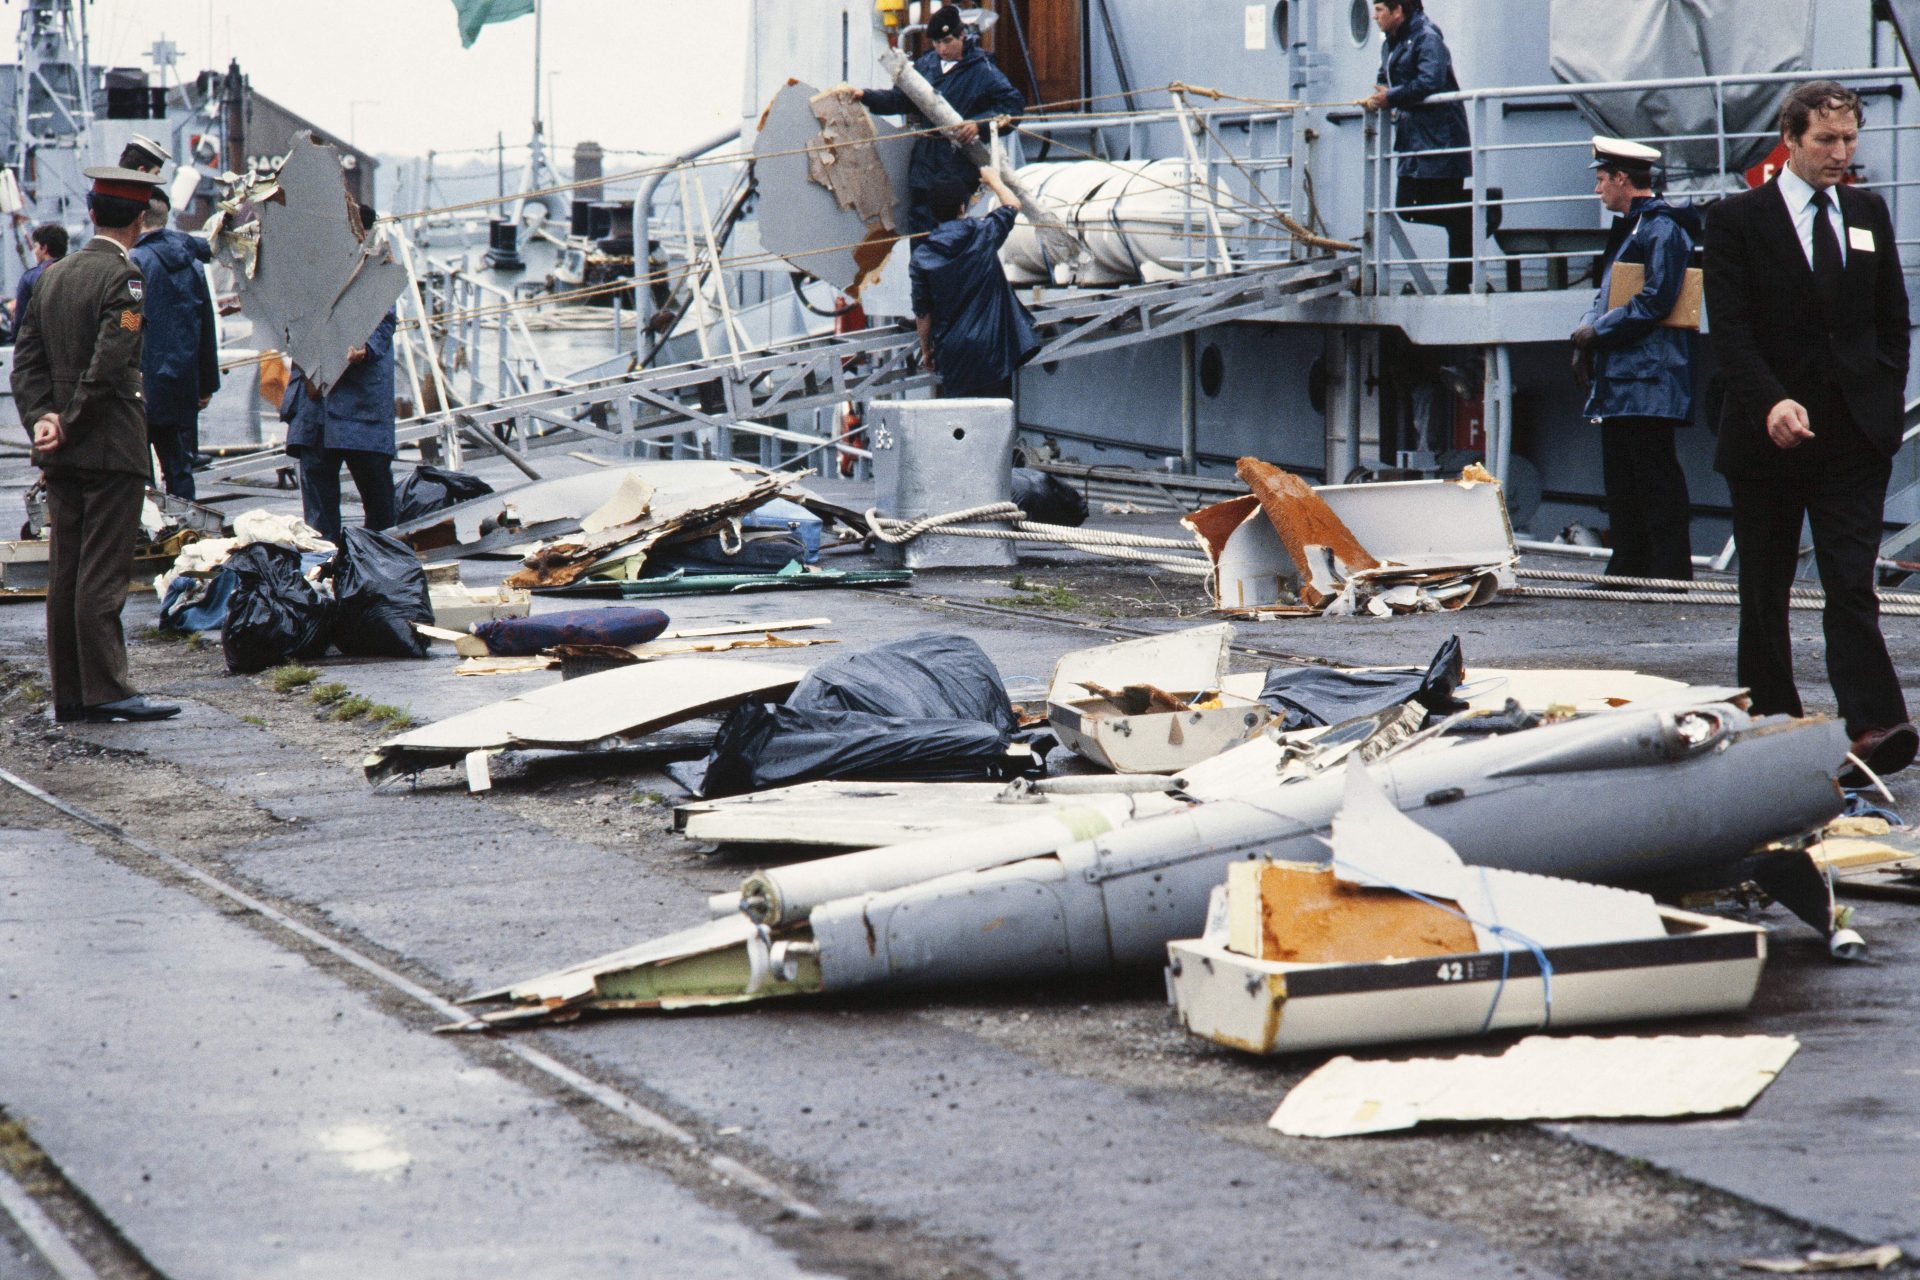 23 июня 1985. Авиакатастрофе Air India 1985. Ирландия, 23 июня 1985, 329 жертв.